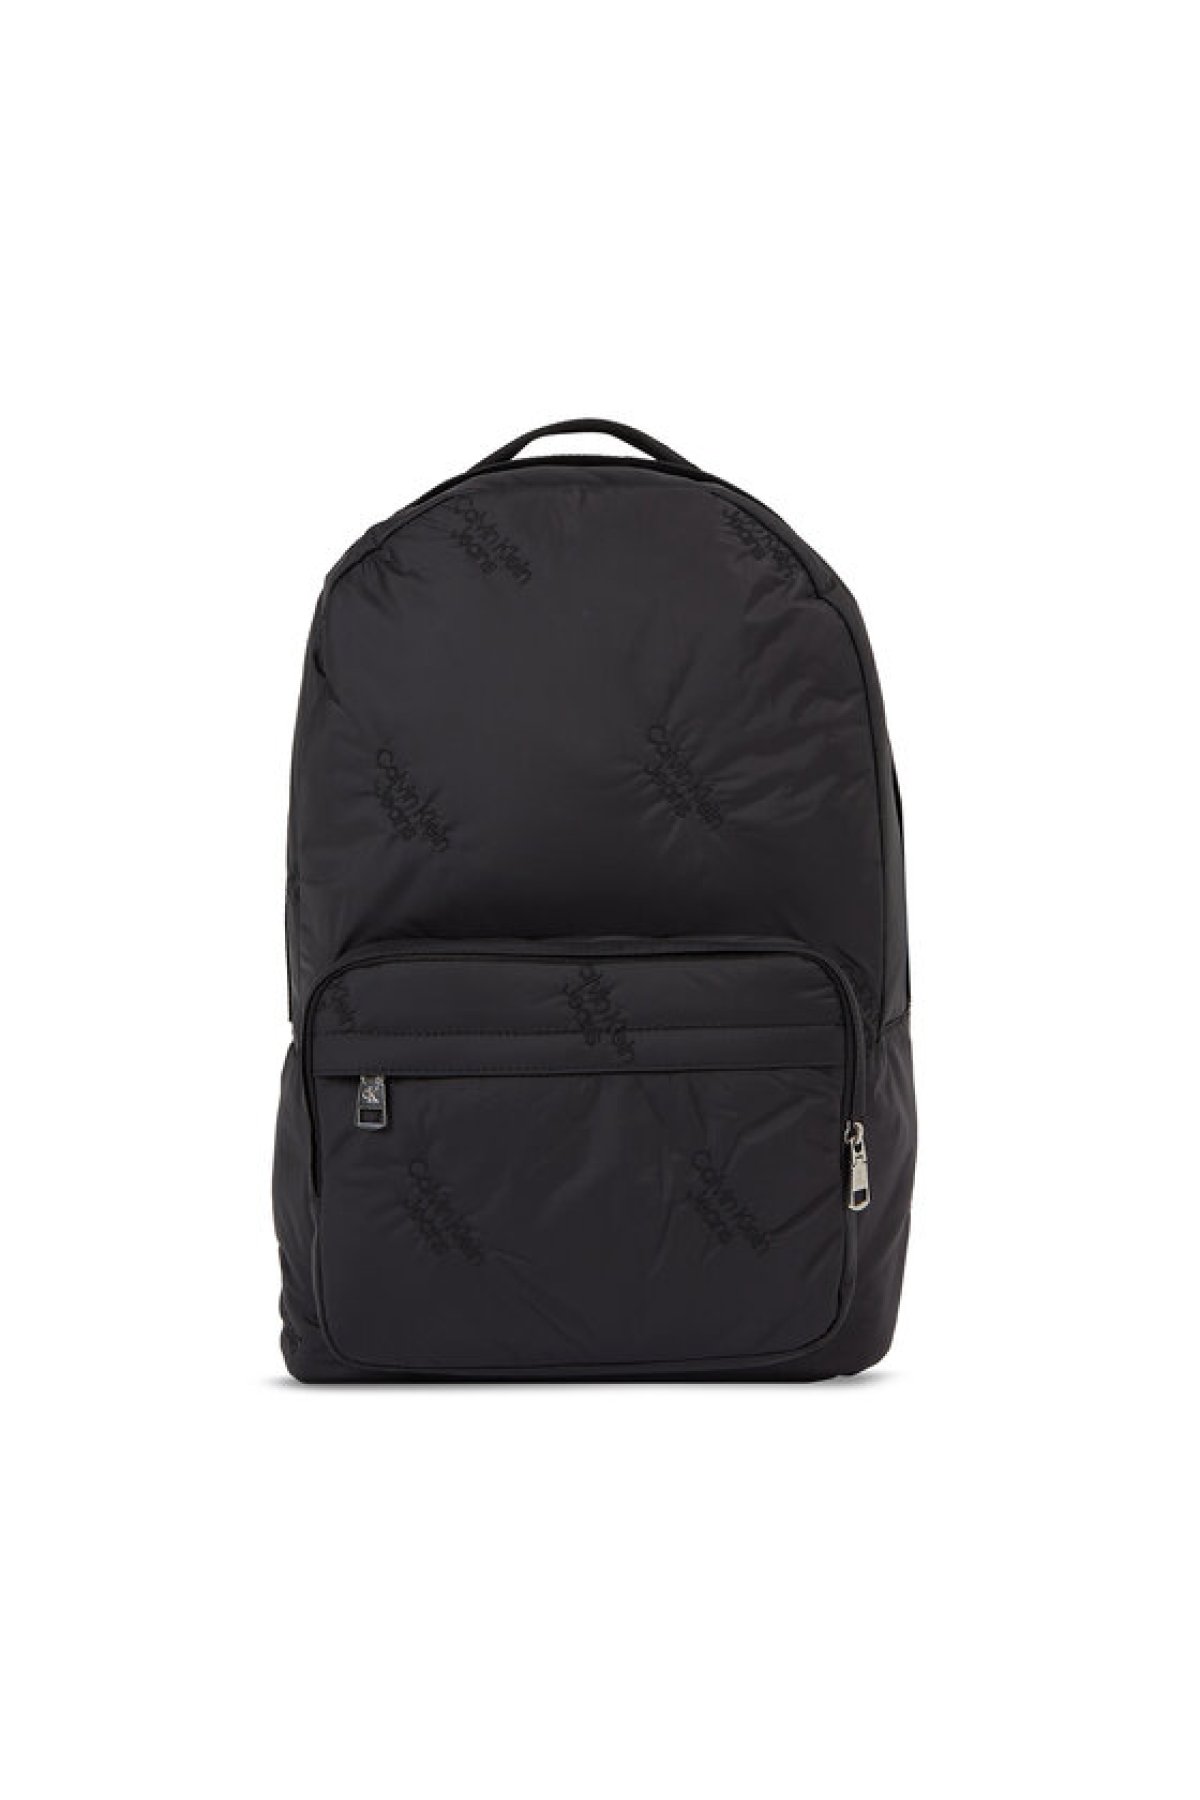 Calvin Klein K50K511035 backpack černý 15l